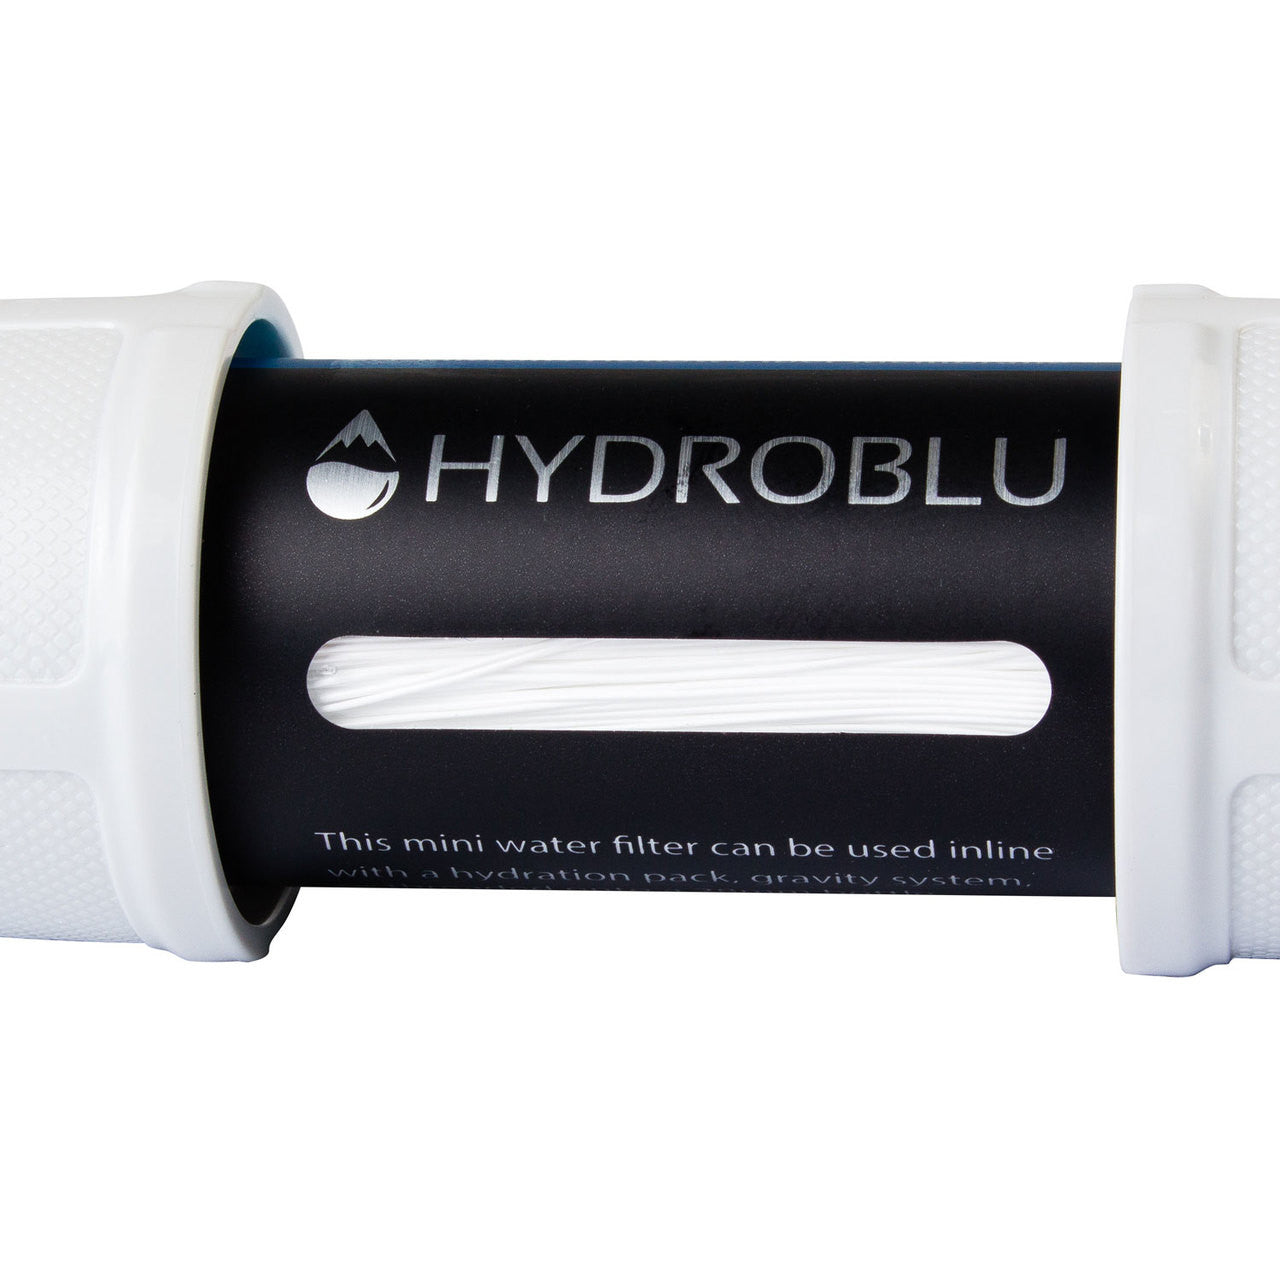 Hydroblu Versa Flow Light-Weight Water Filter Package